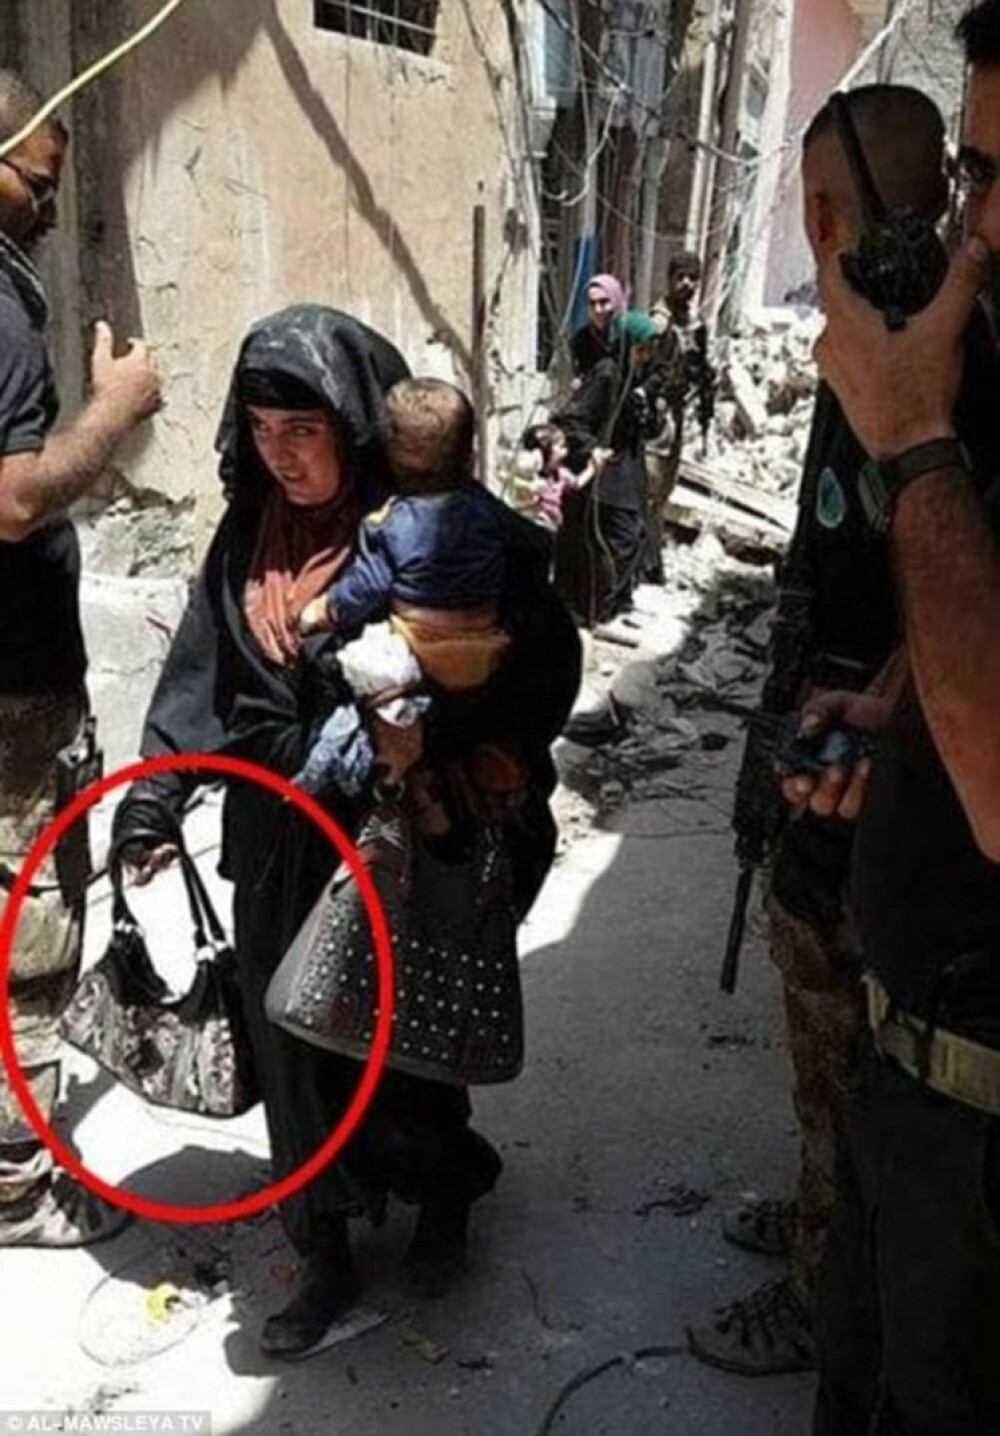 Femeie kamikaze fotografiata cu bebelusul in brate chiar inainte de a detona bomba care i-a ucis pe amandoi, la Mosul - Imaginea 1